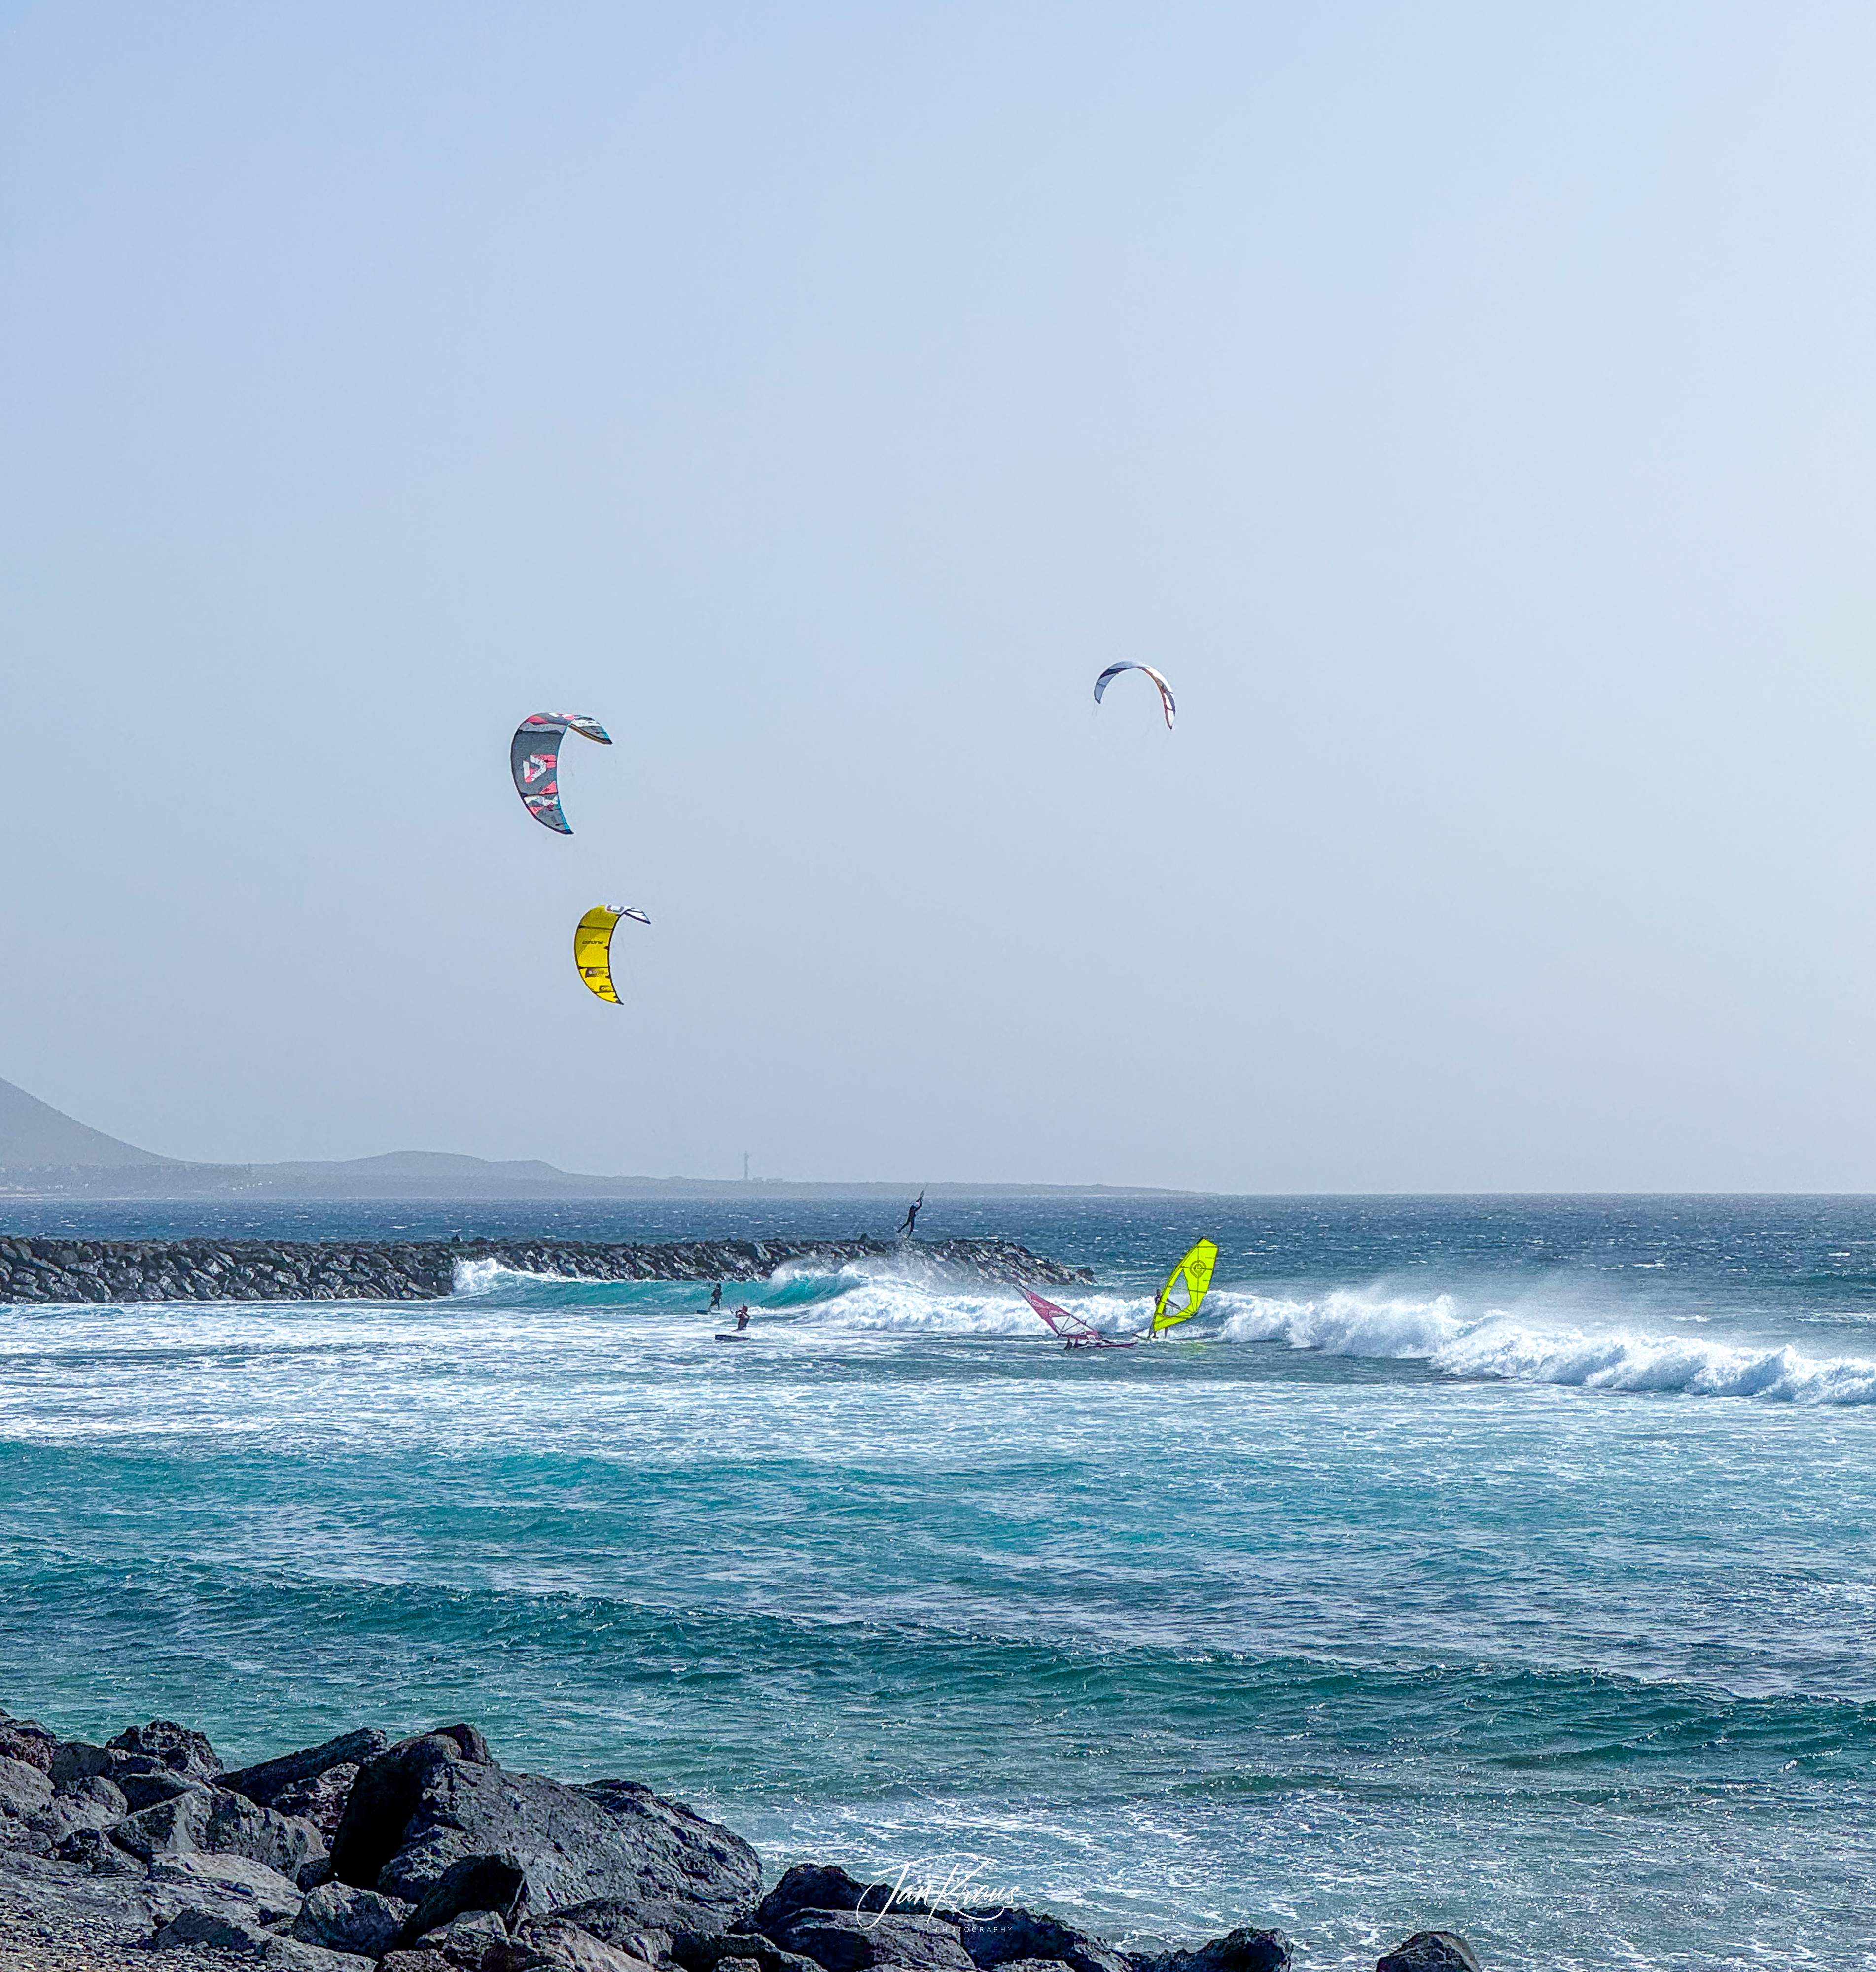 Windsurfing activities at the Playa de las Américas, Tenerife, Canary Islands, Spain